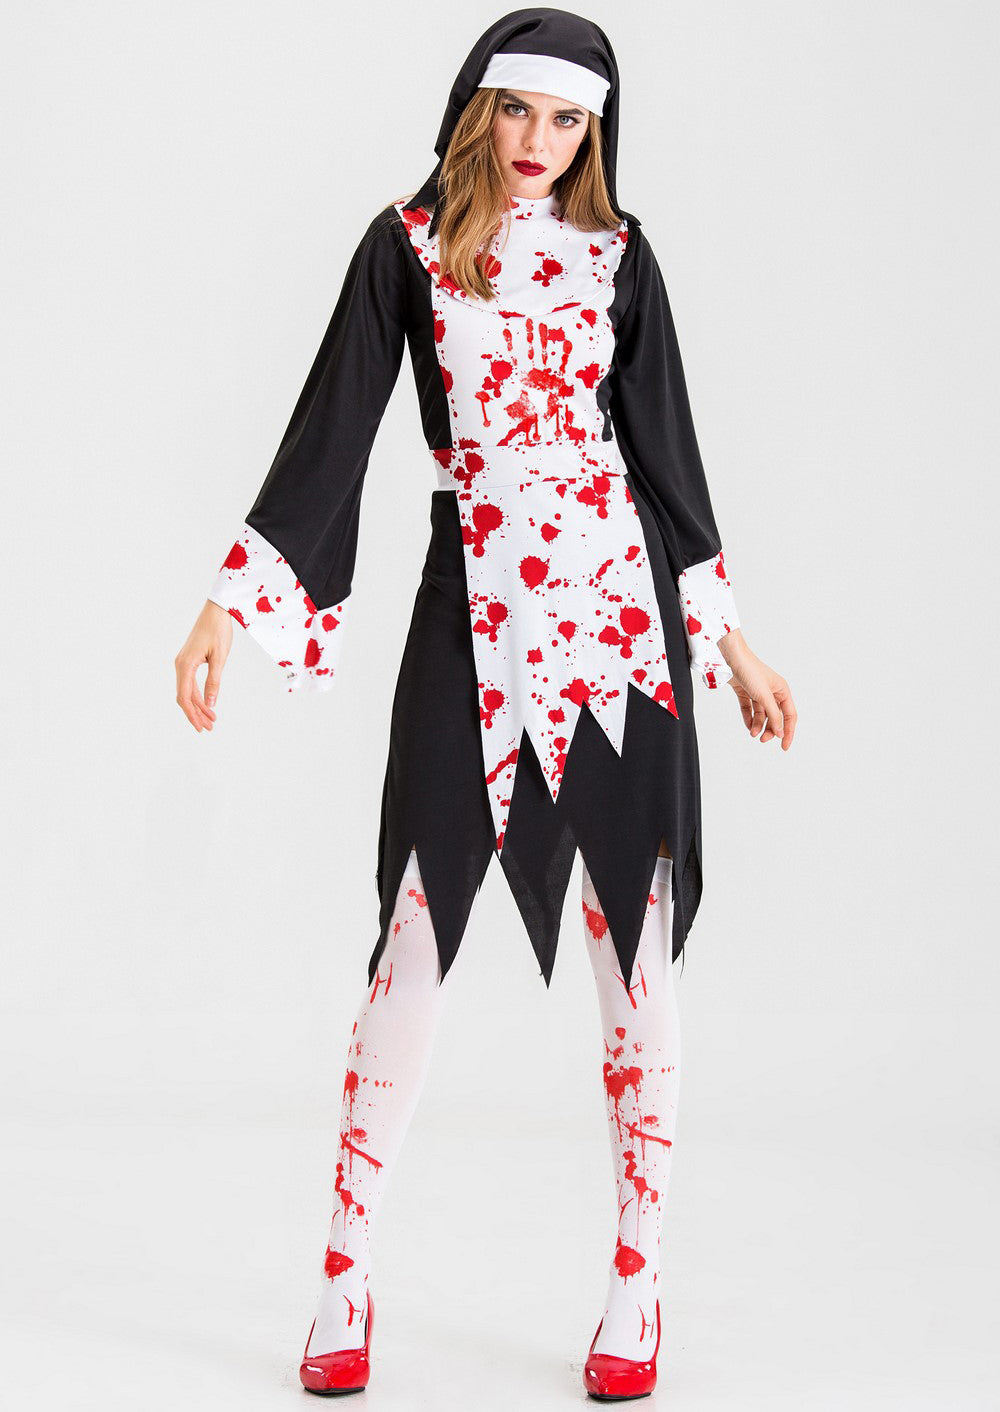 Vampire Zombie Nun Costume Halloween Costume Cos Costume Cosplay Blood Dripping Zombie Nun Costume